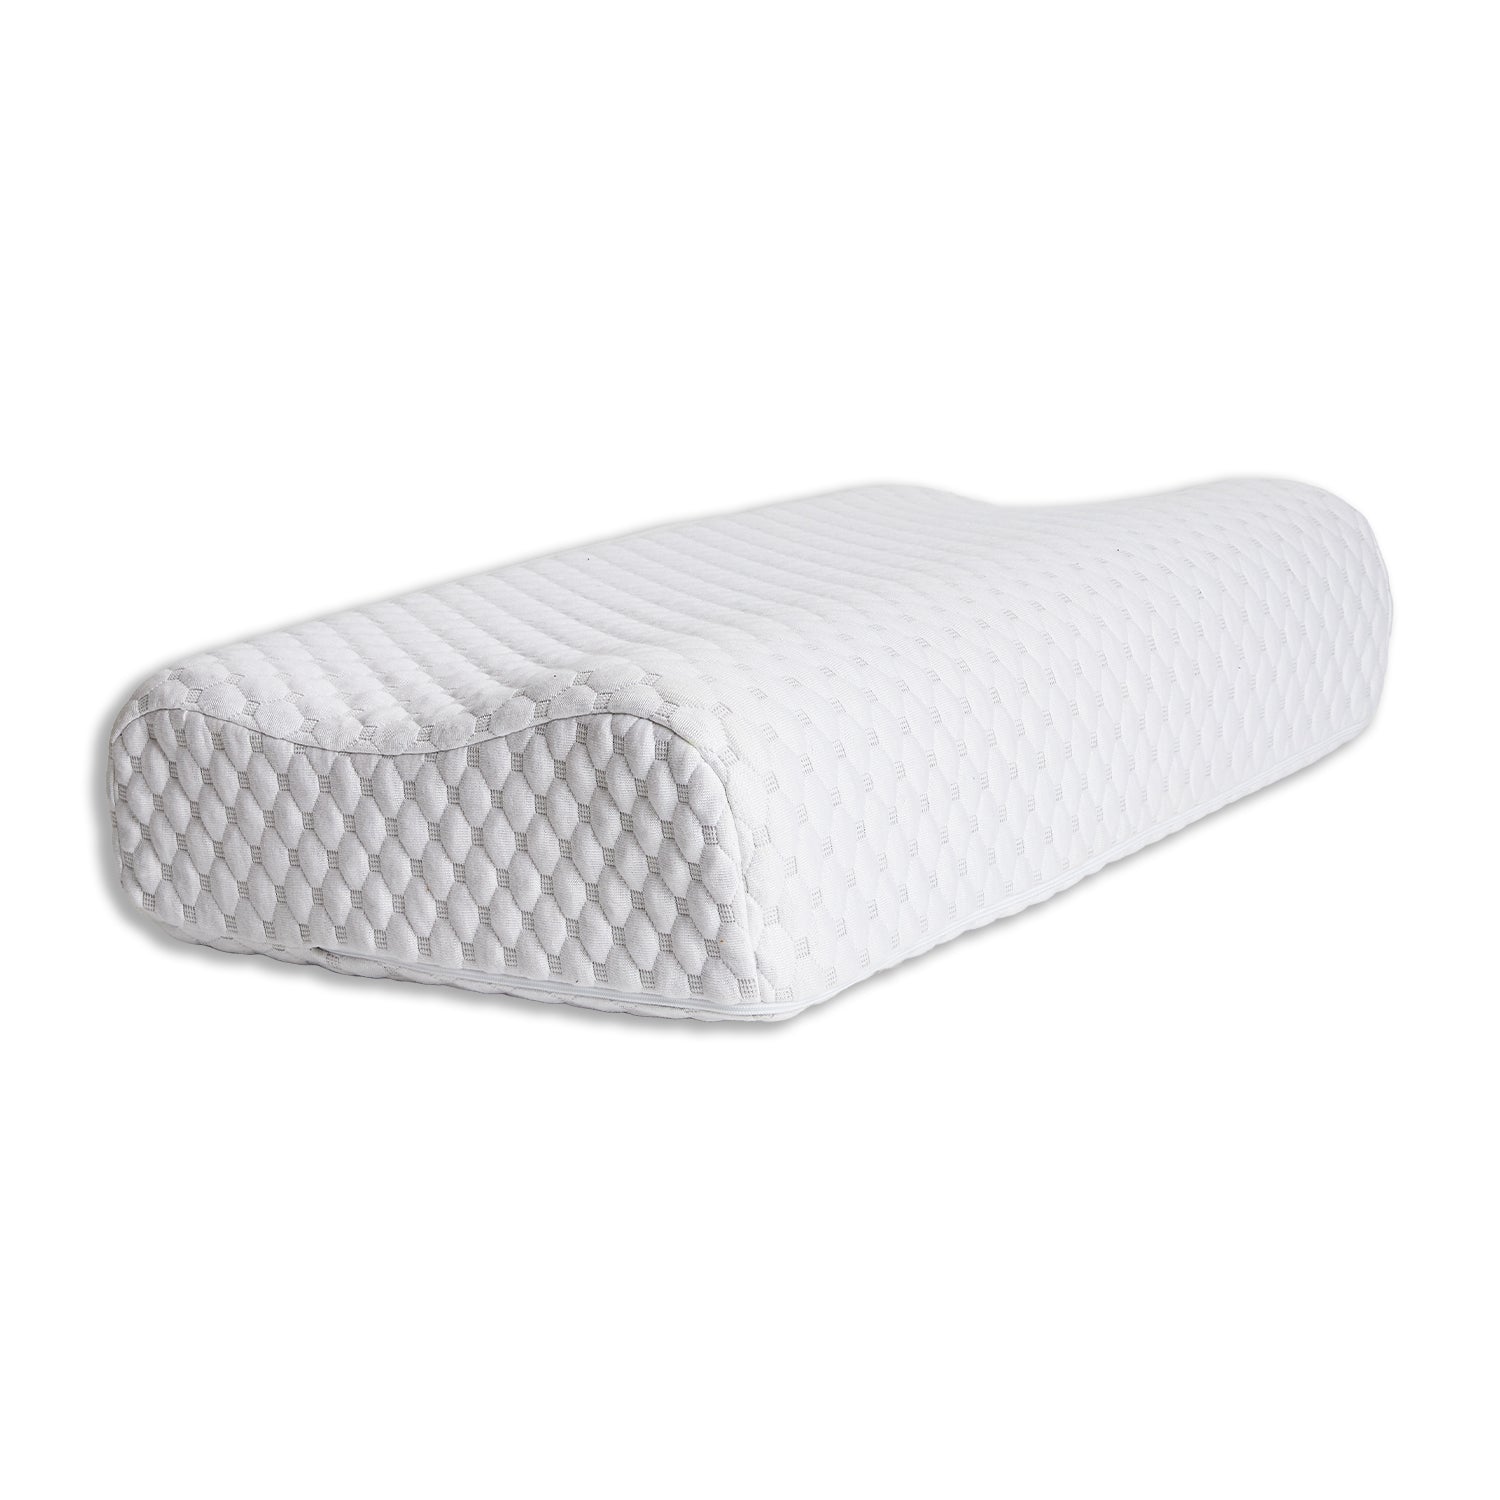 Somna Medica Gel Infused Moderate Contour Adjustable Pillow - Mattress & Pillow SciencePillows